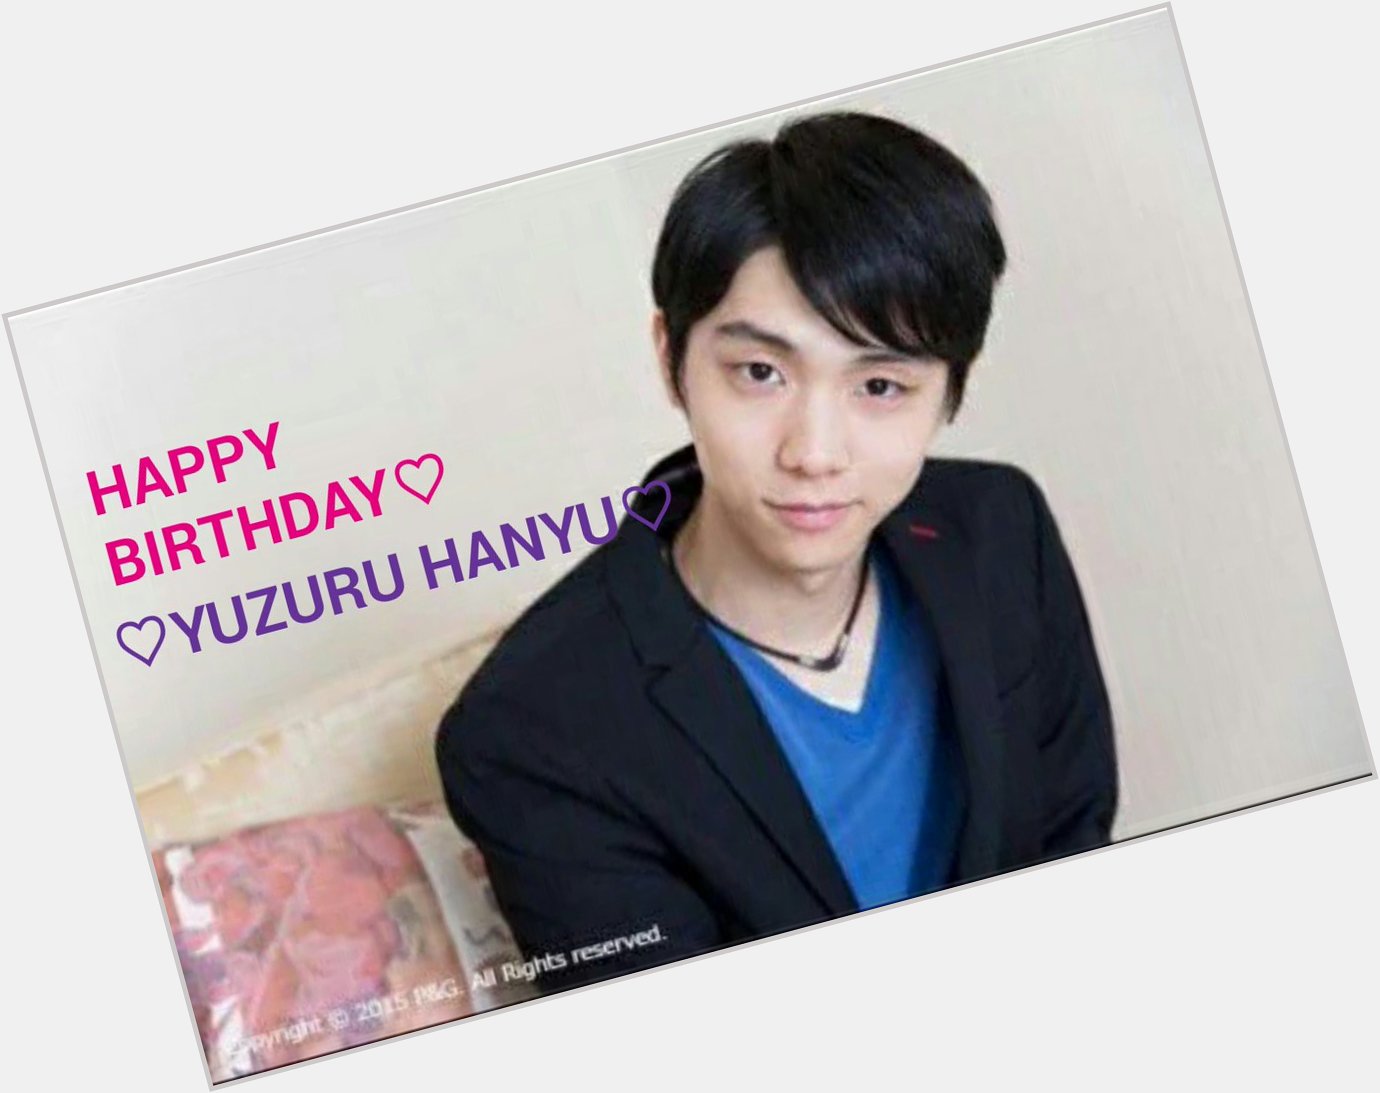 0                Happy Birthday  YUZURU HANYU   20                       1                    